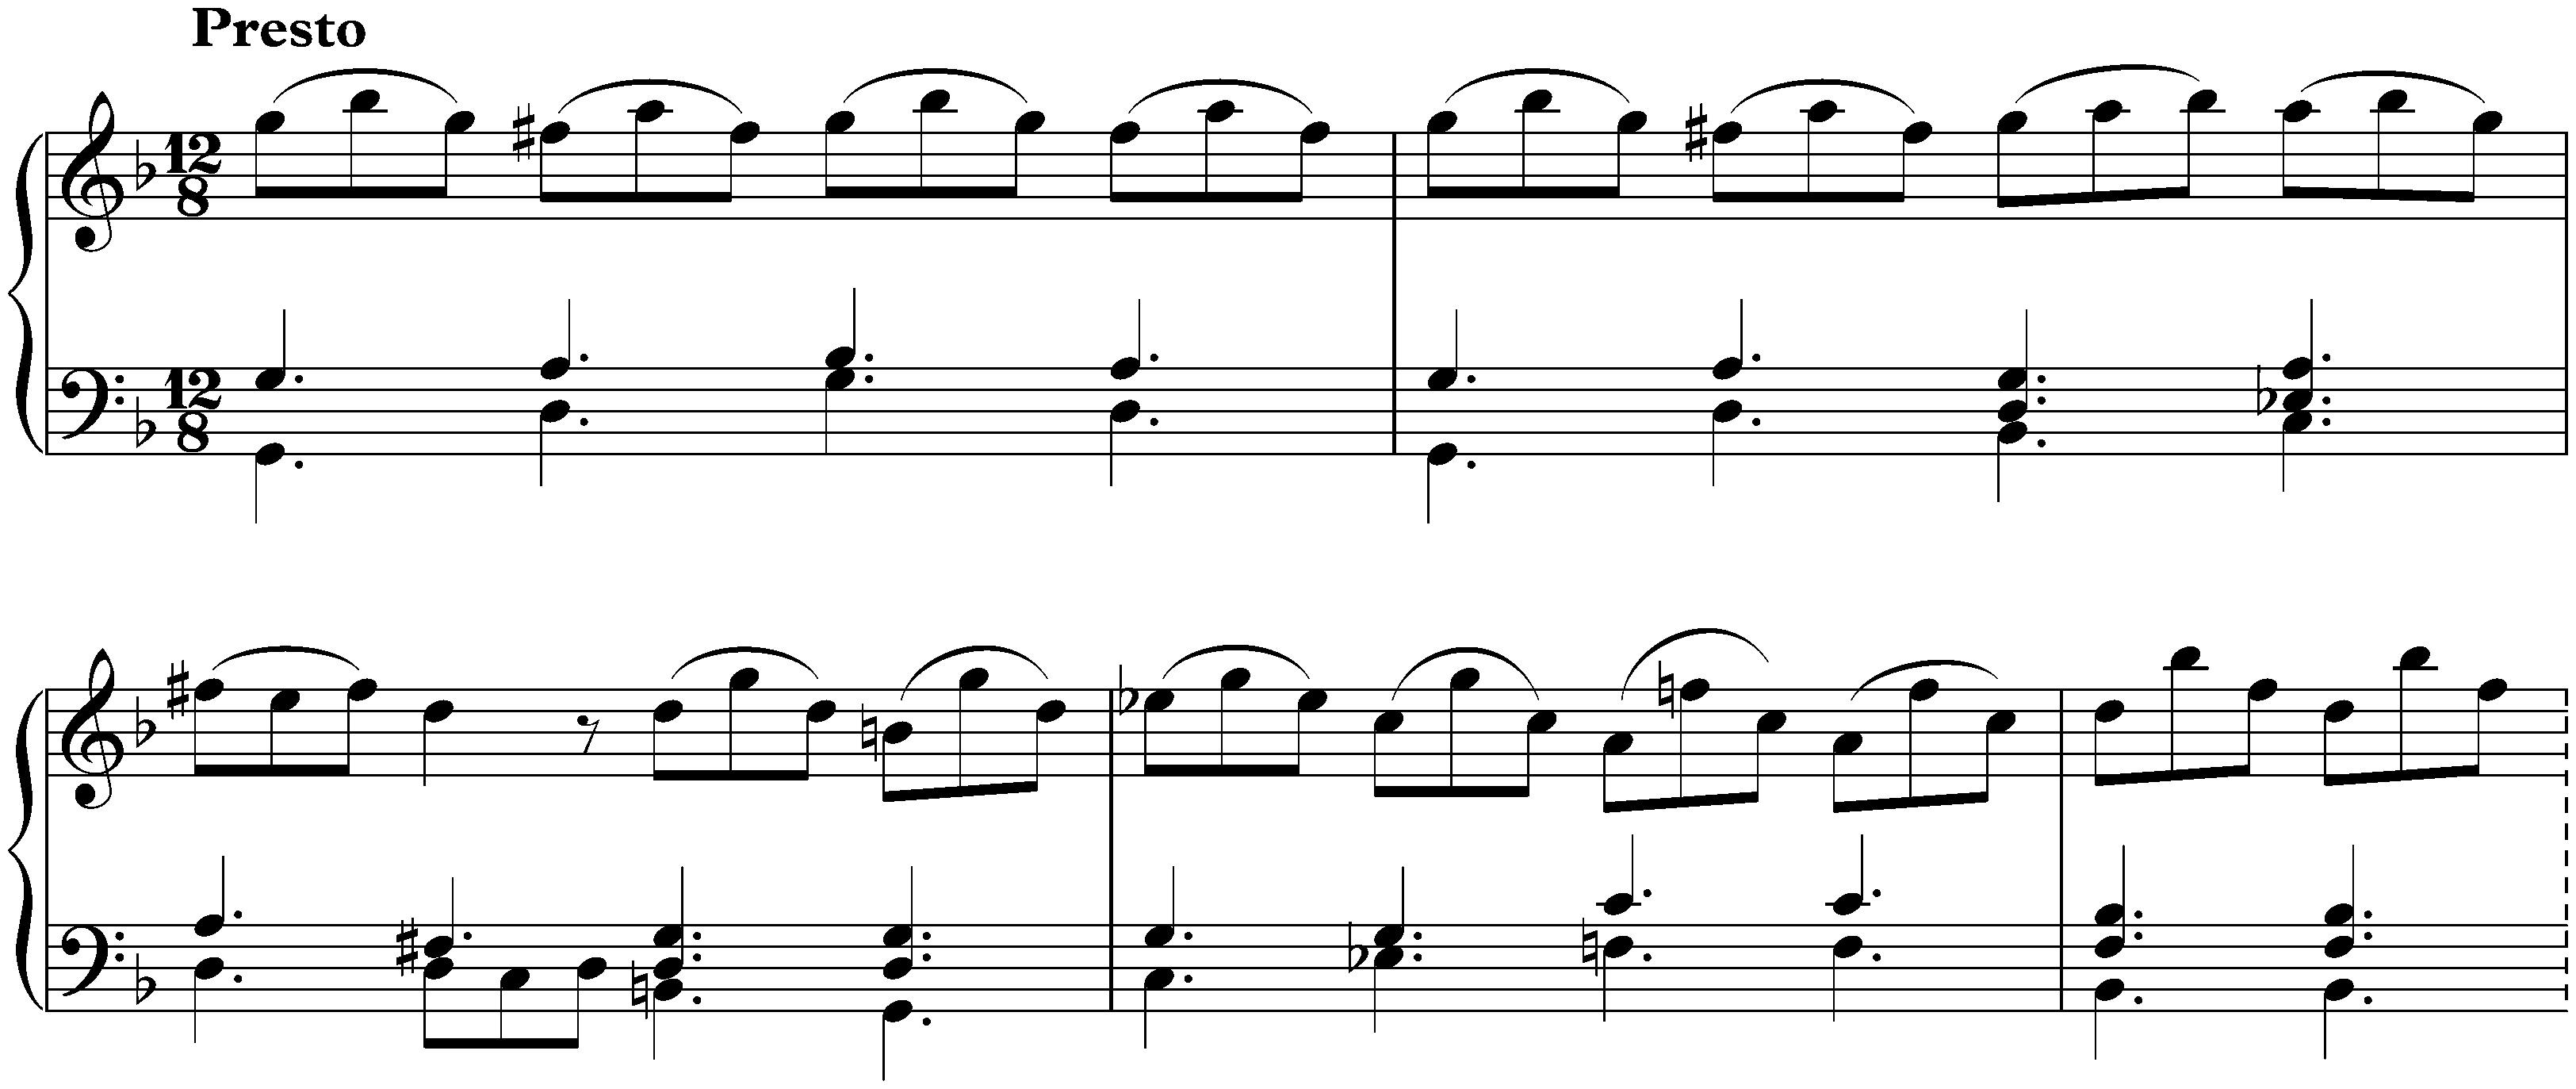 Concerto in G minor after Antonio Vivaldi, BWV 975; 3. Giga: Presto